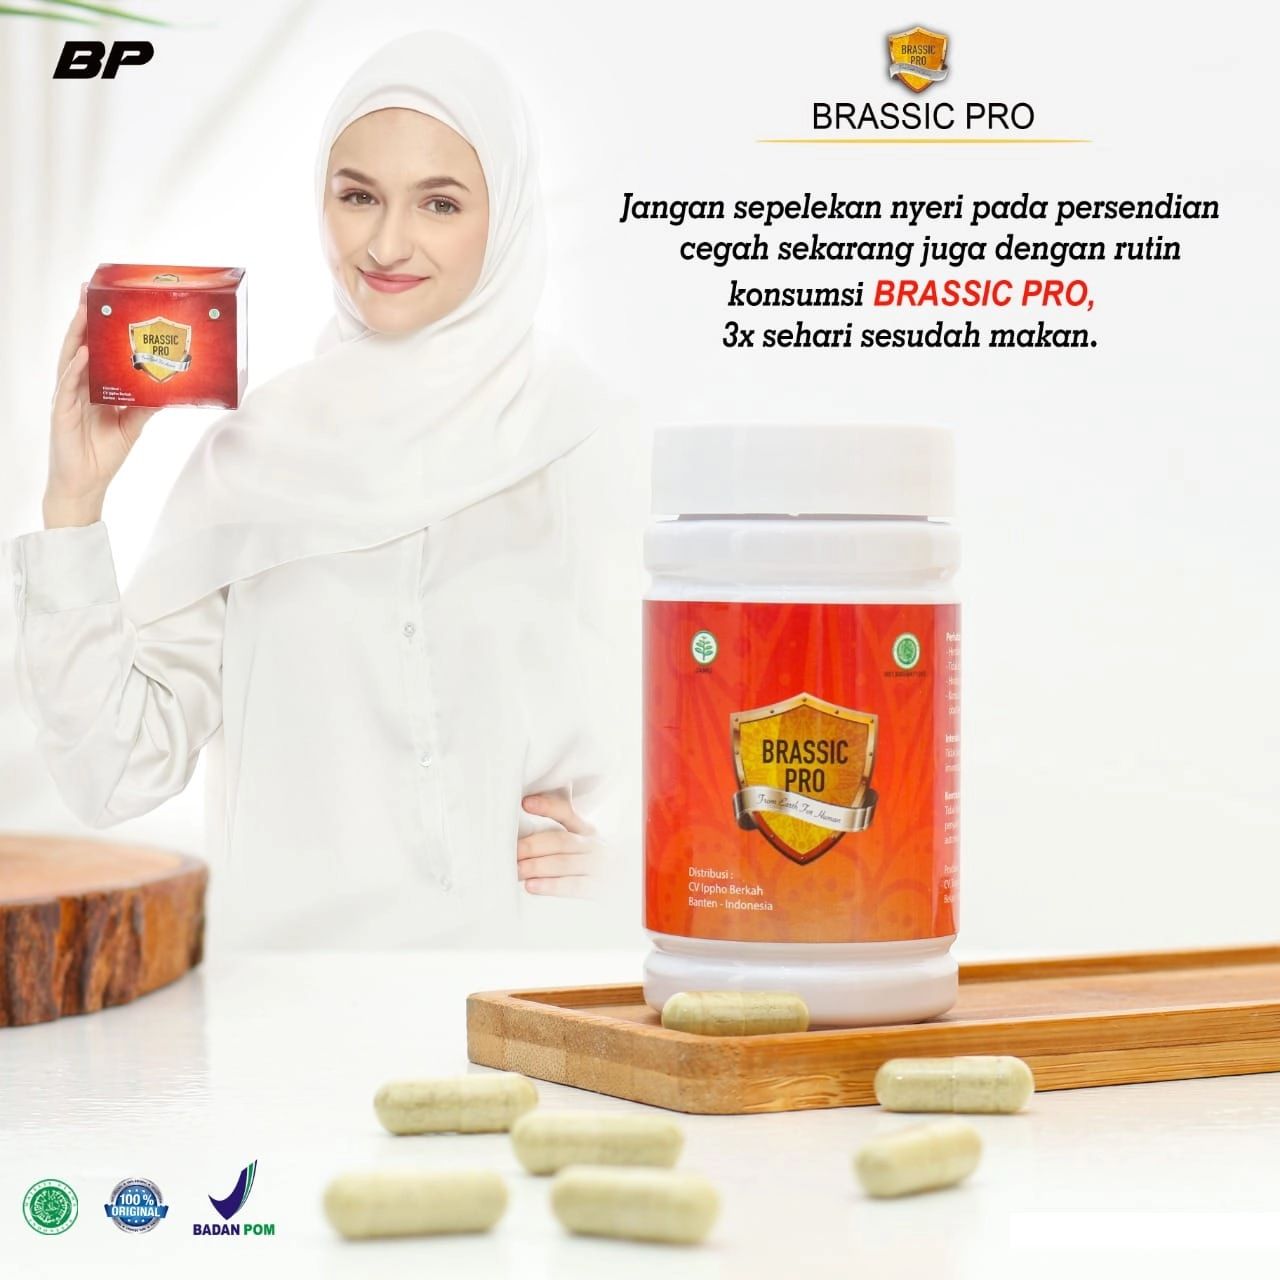 Peluang Usaha Brassic Pro BP Suplemen Herbal di Bandung